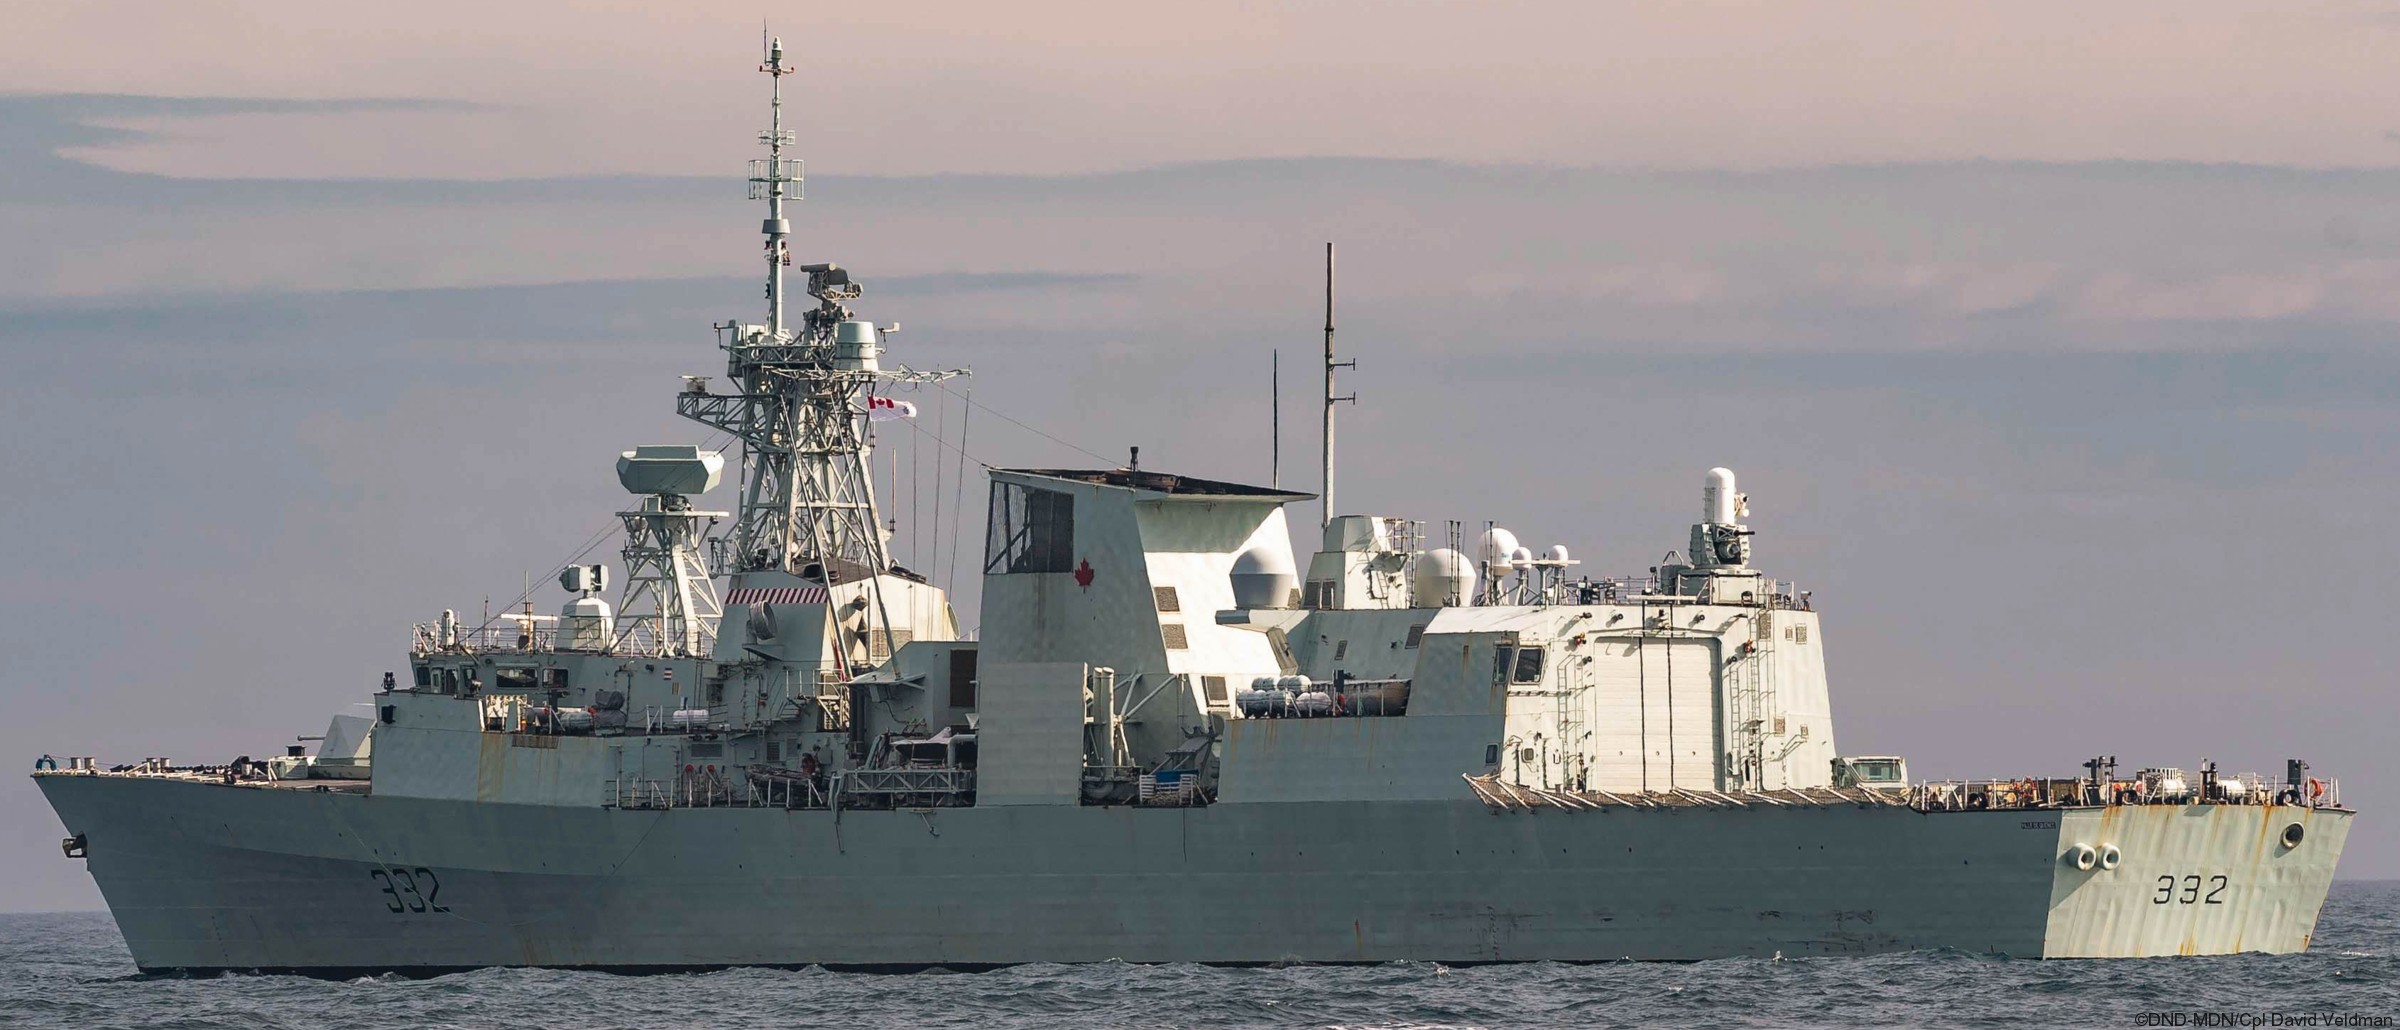 ffh-332 hmcs ville de quebec halifax class helicopter patrol frigate ncsm royal canadian navy 04